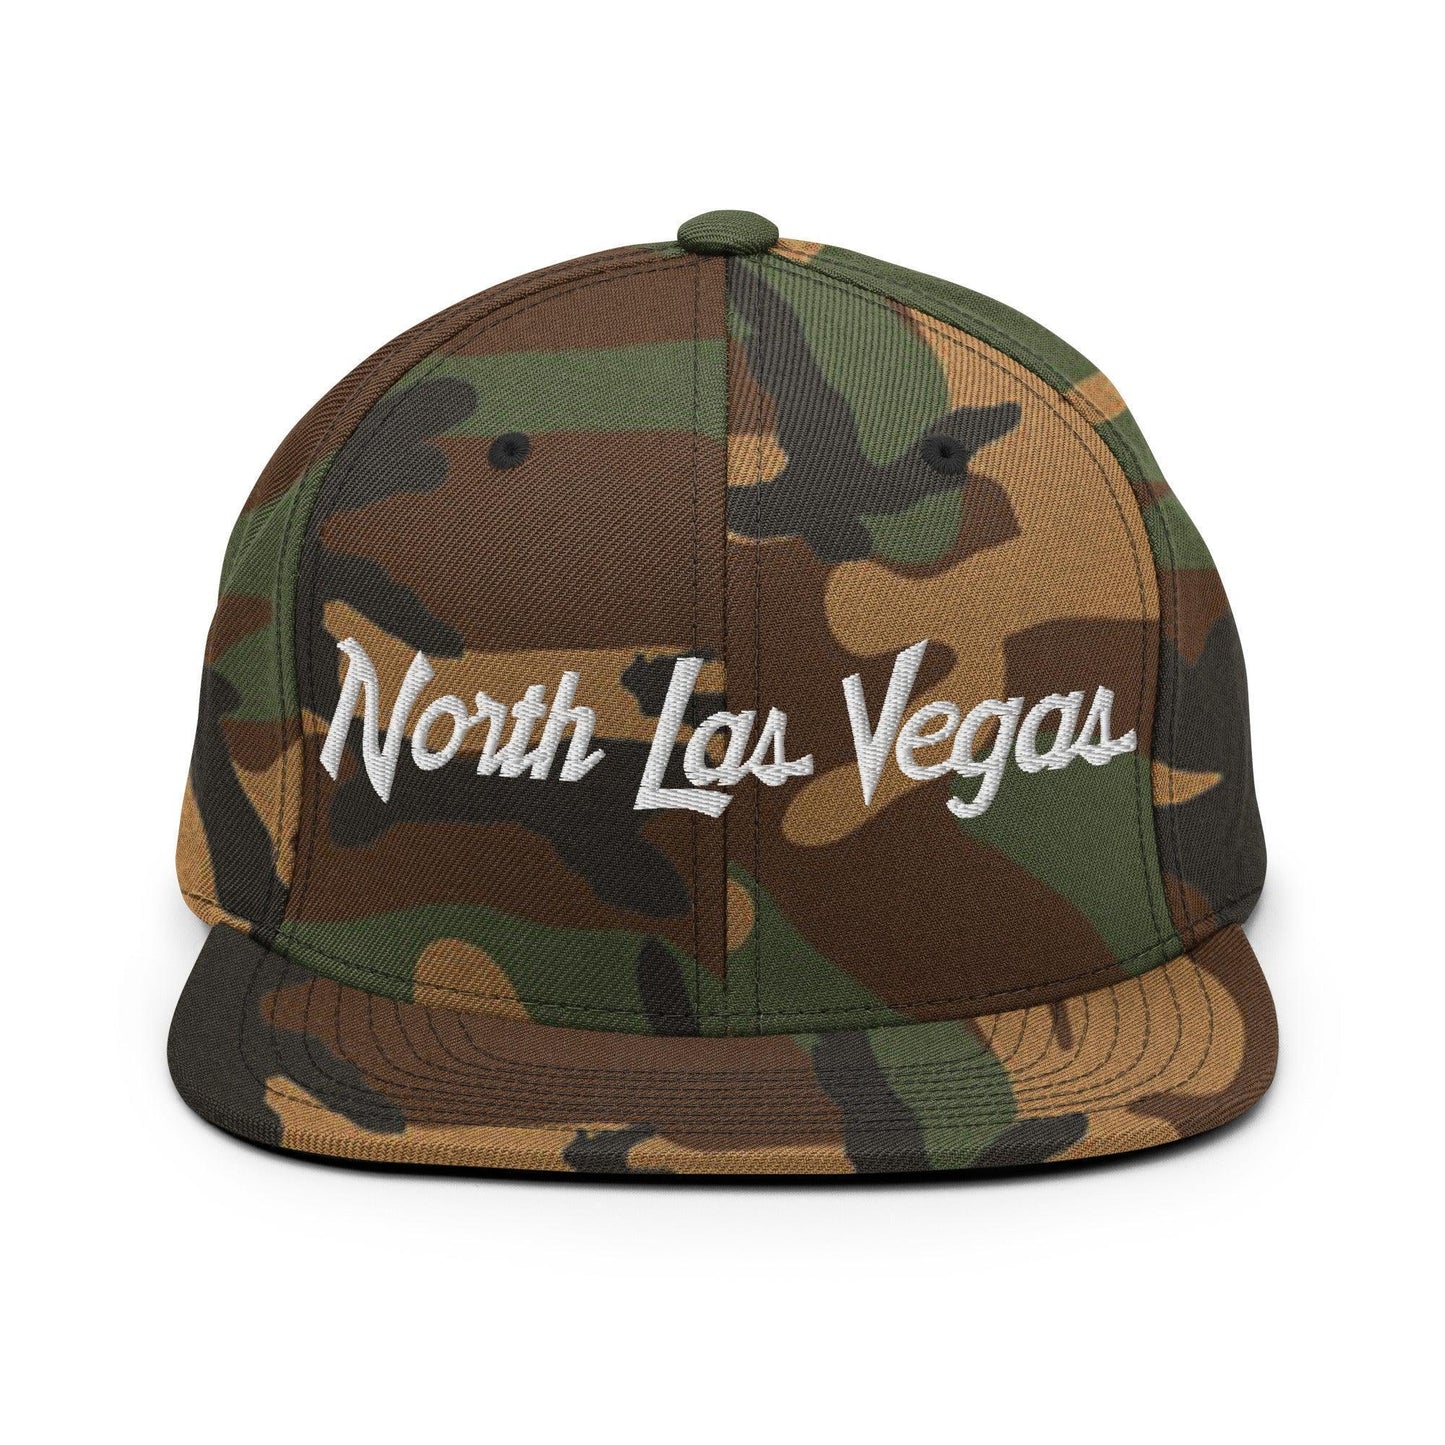 North Las Vegas Script Snapback Hat Green Camo